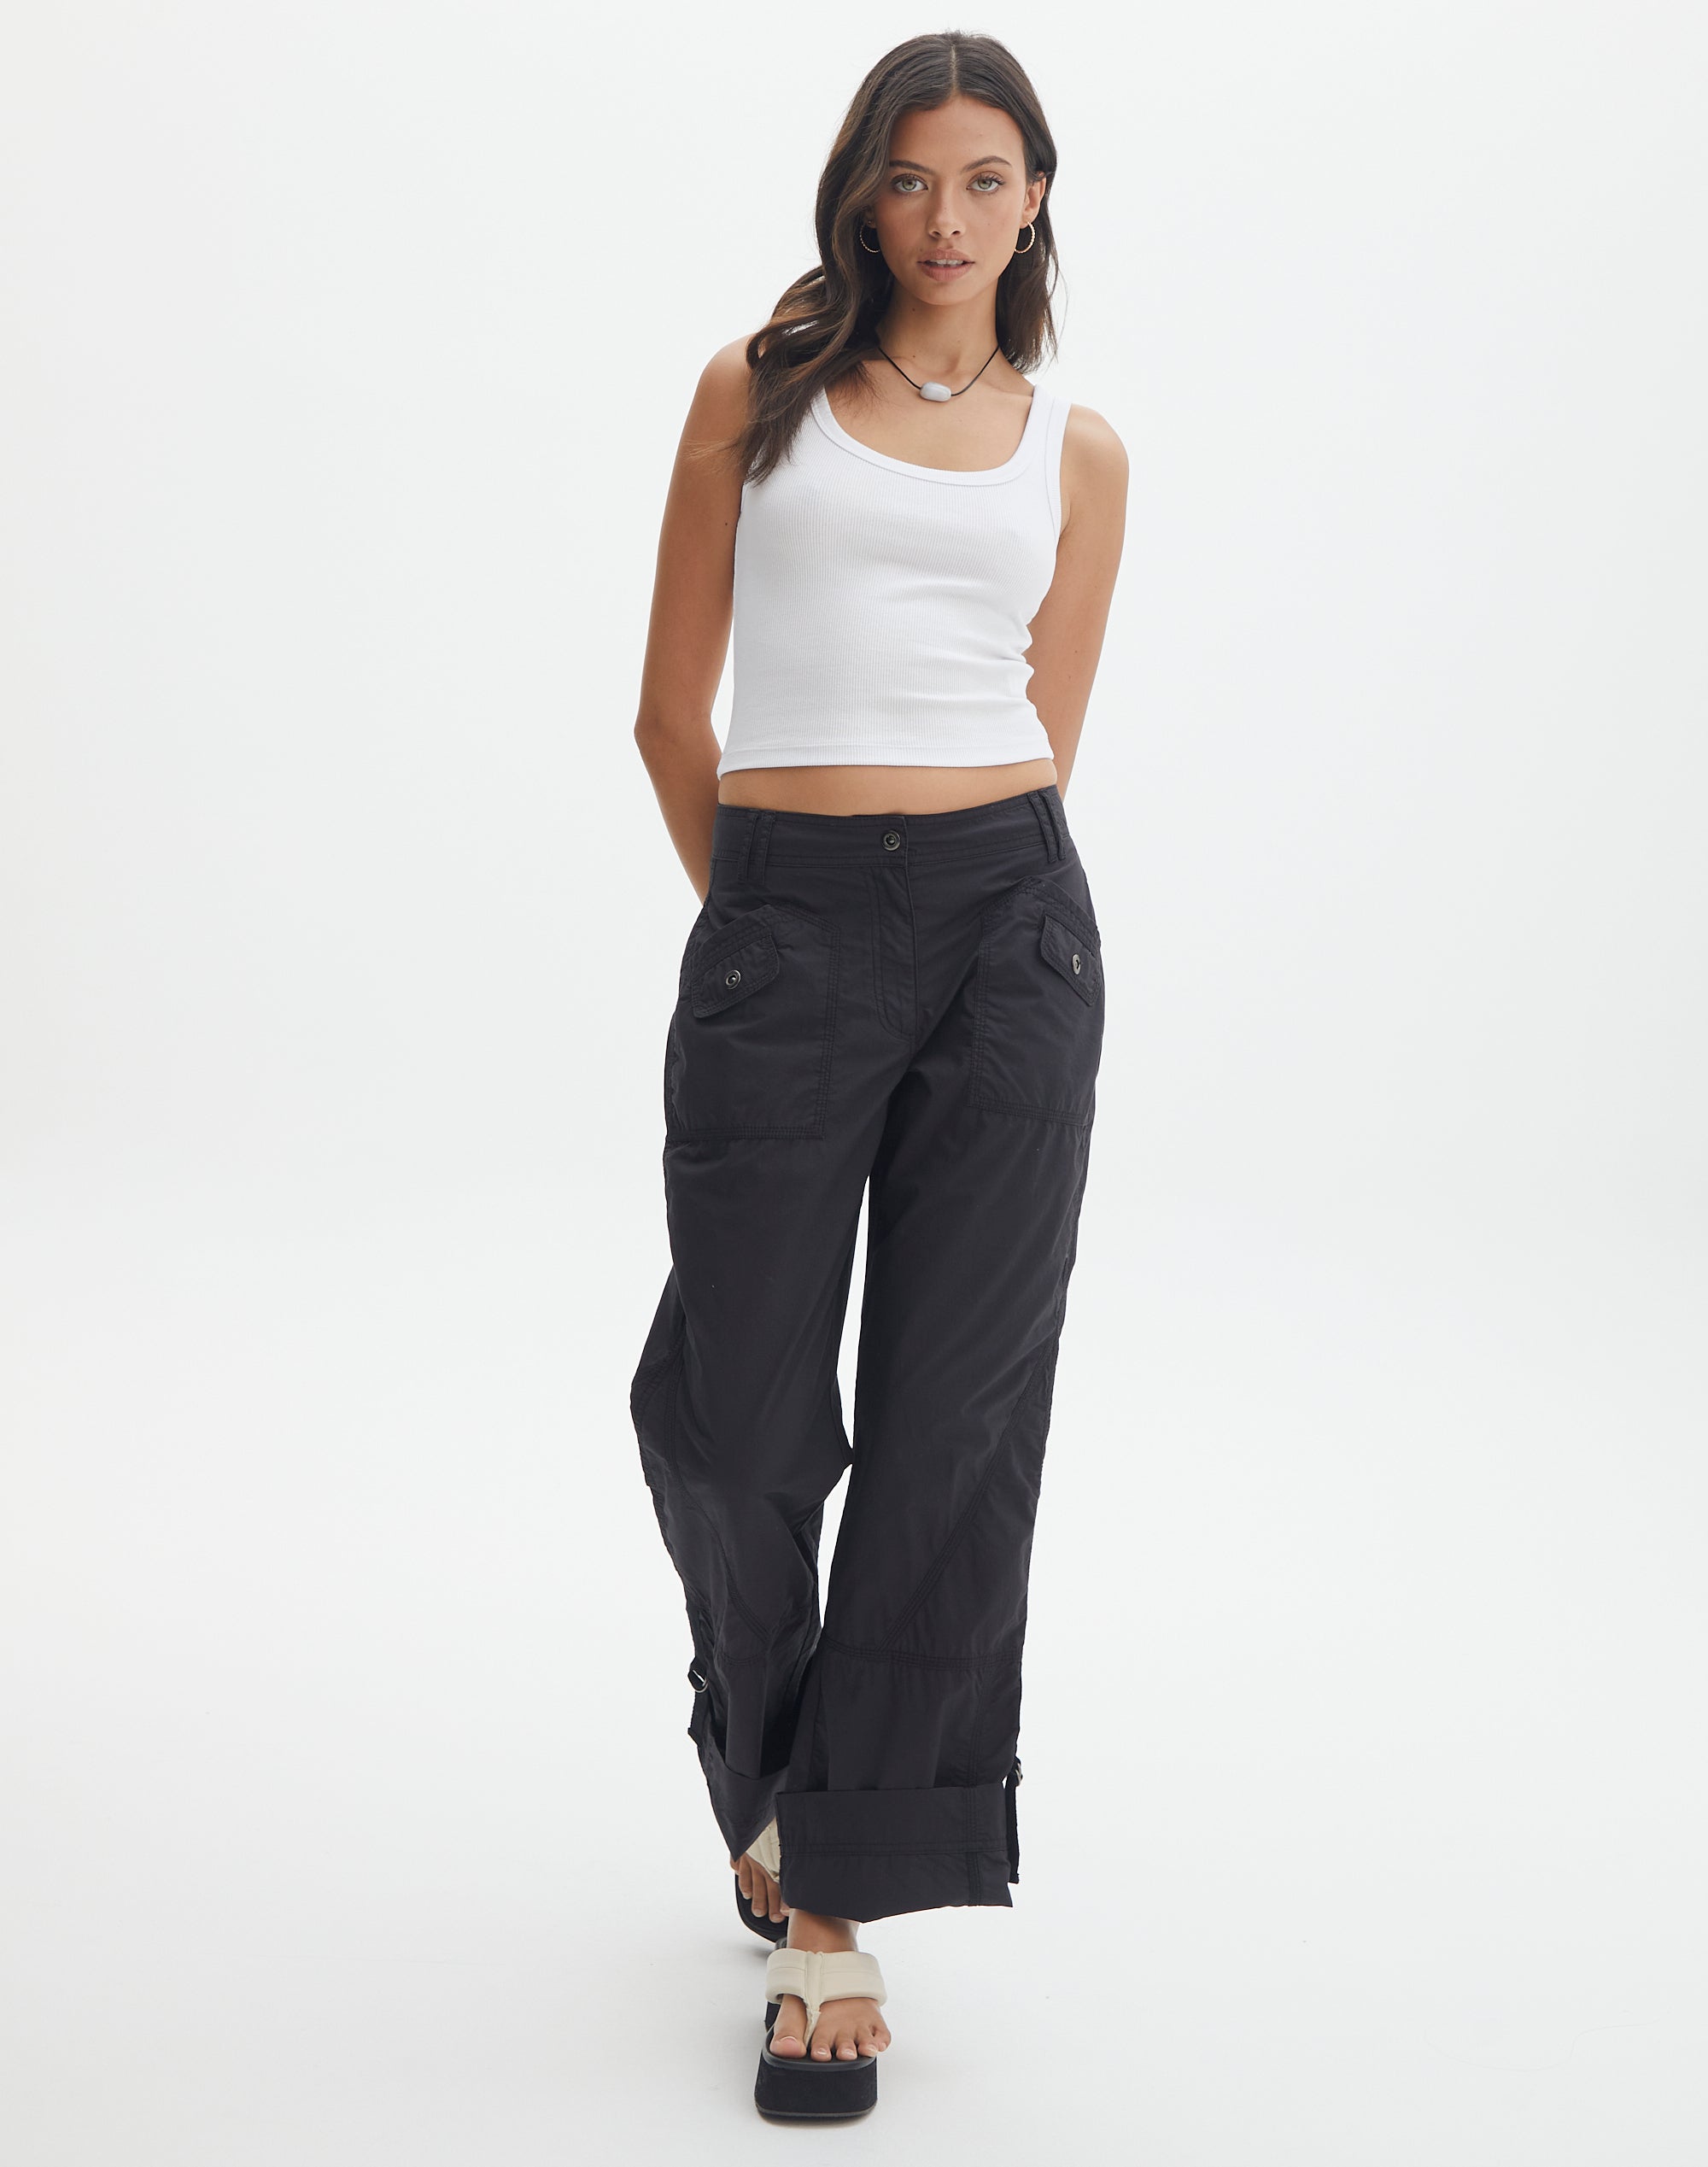 4]Lululemon Dance Studio Mid-Rise Cropped Pant Size 4 Black (New